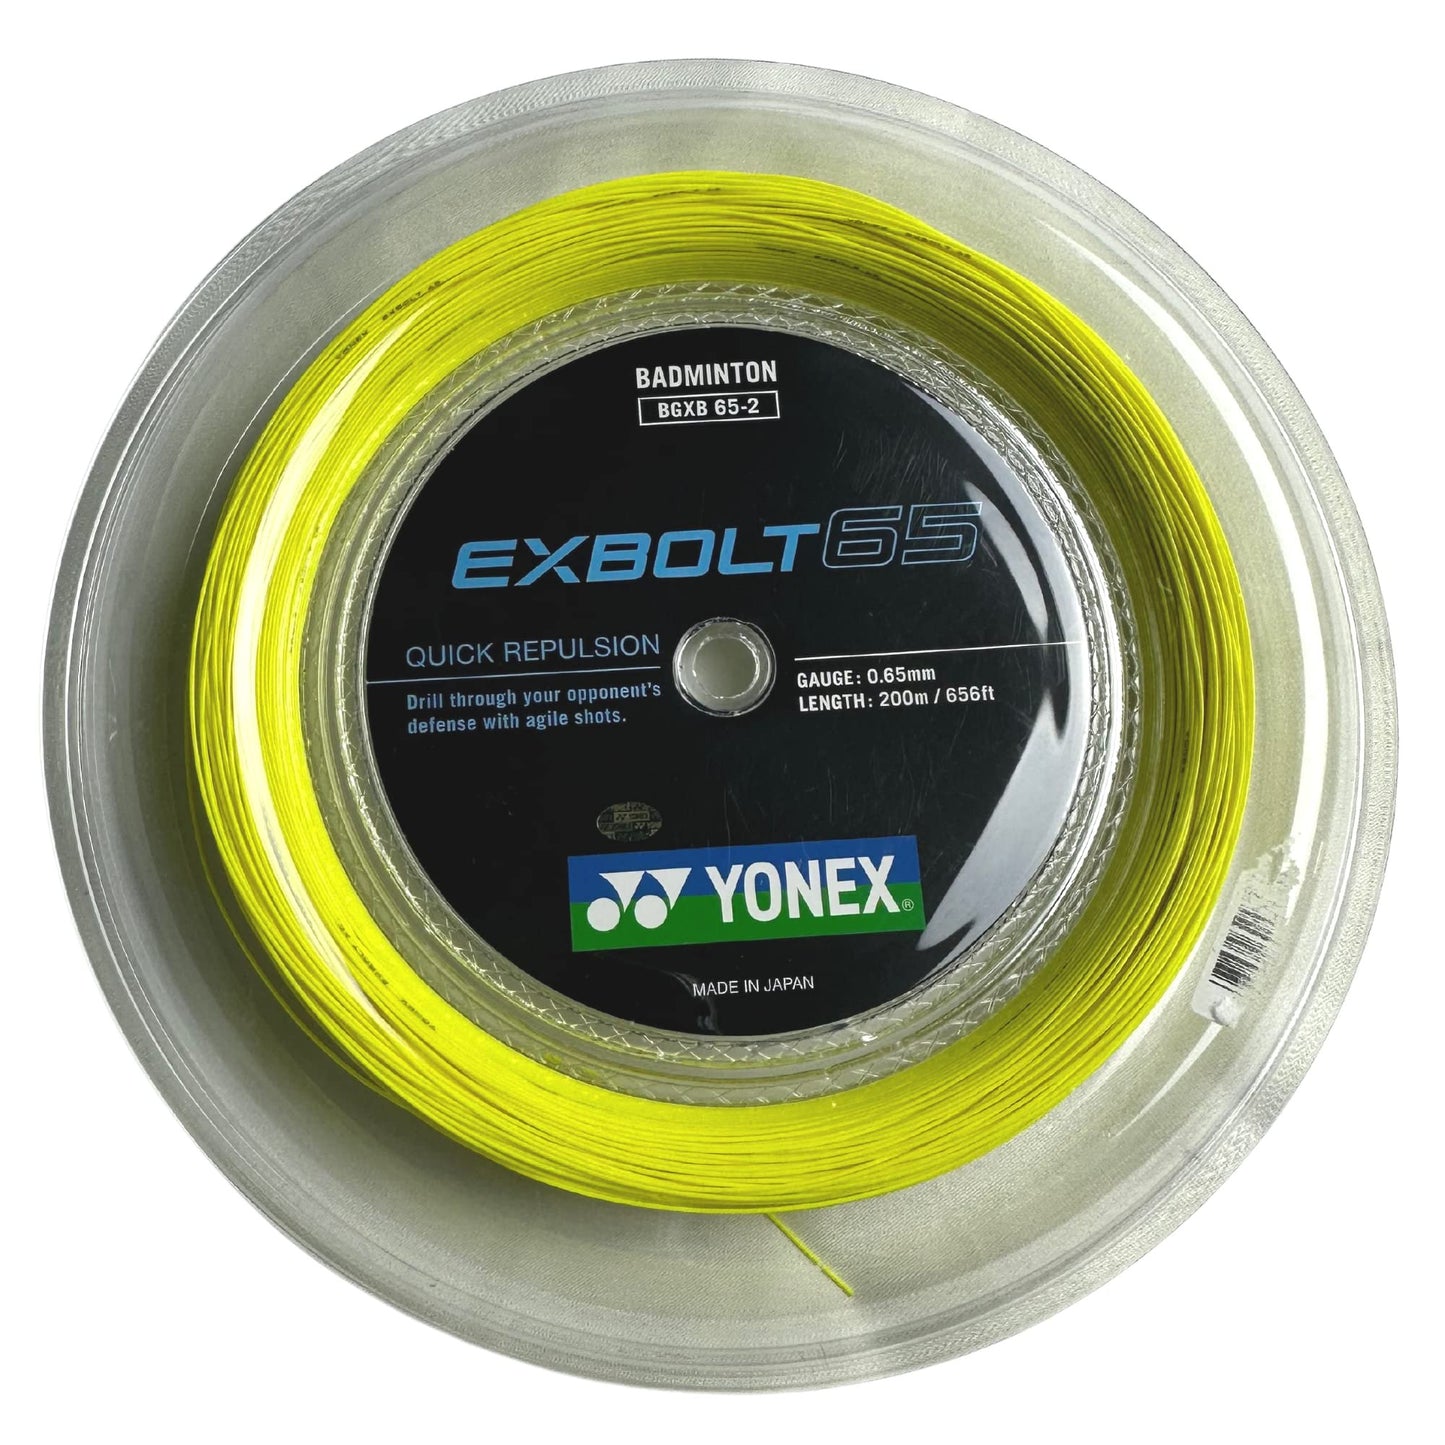 Yonex EXBOLT 65 Badminton String - 200m Reel